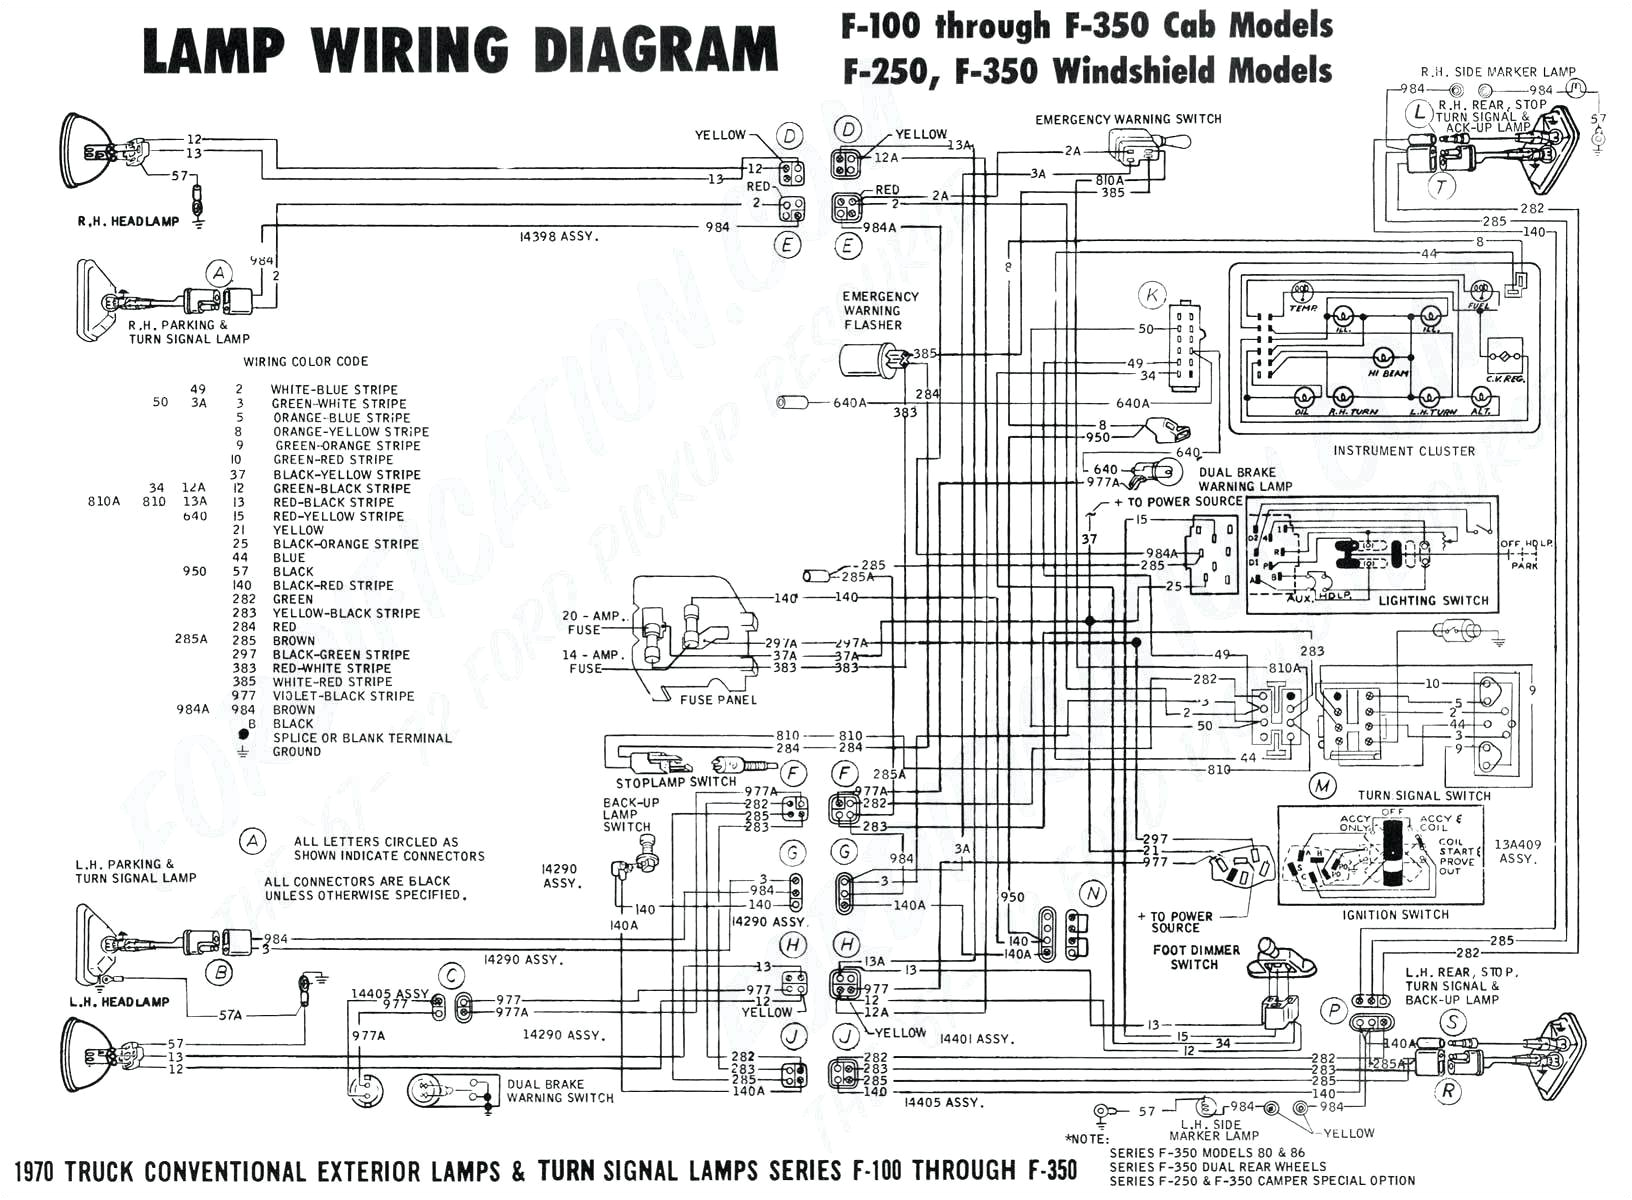 automotive wiring mercury tagged circuit diagrams electrical circuit automotive wiring mercury tagged circuit diagrams electrical circuit